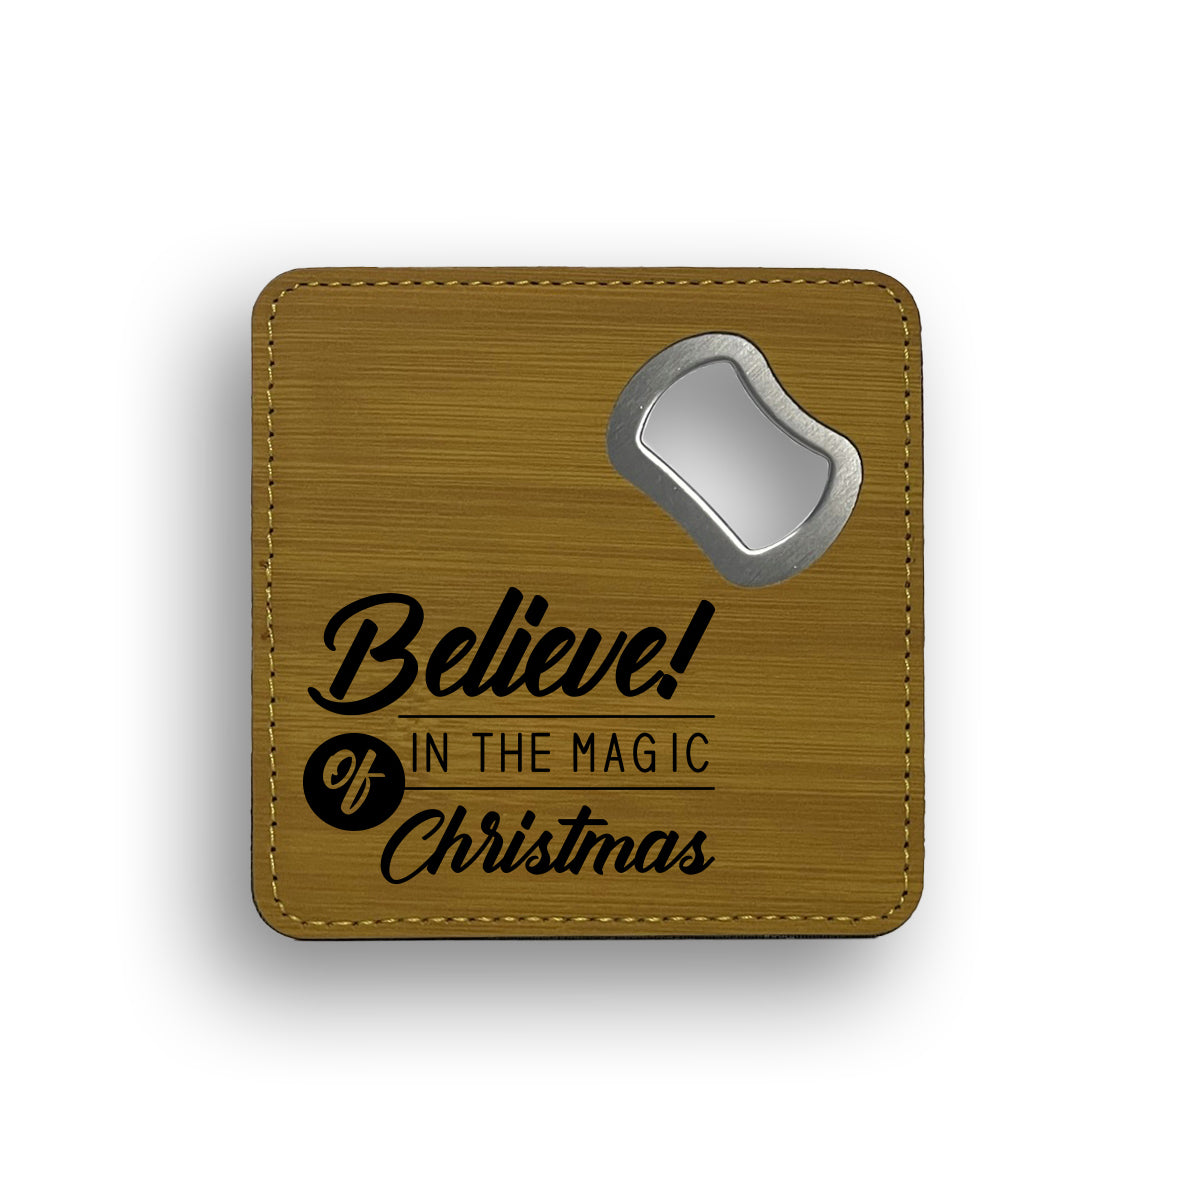 Believe Magic Christmas Bottle Opener Coaster